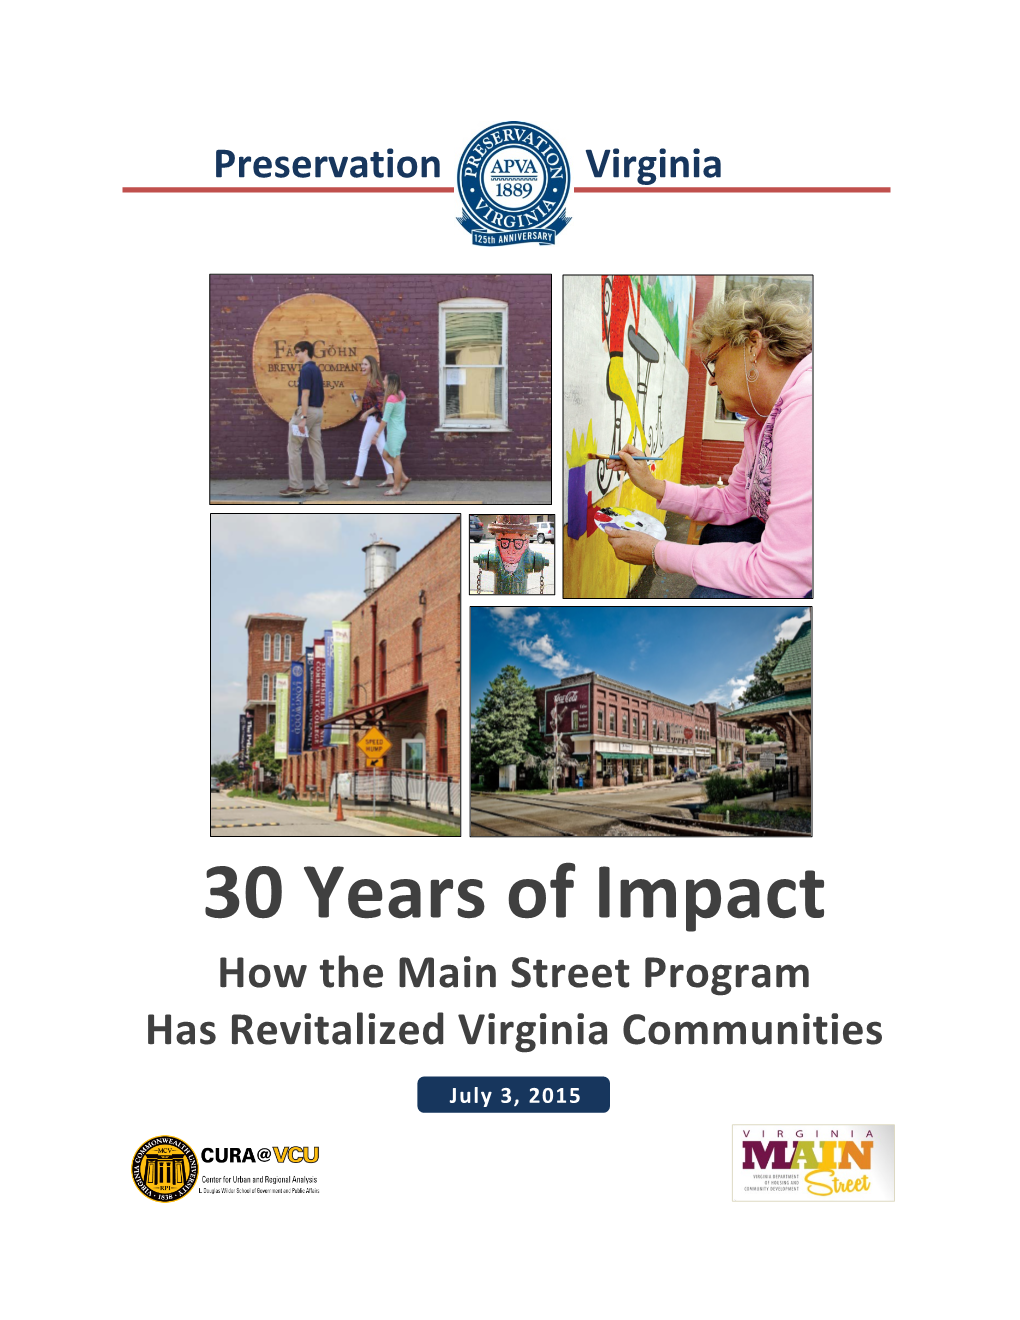 How the Main Street Program Has Revitalized Virginia Communities